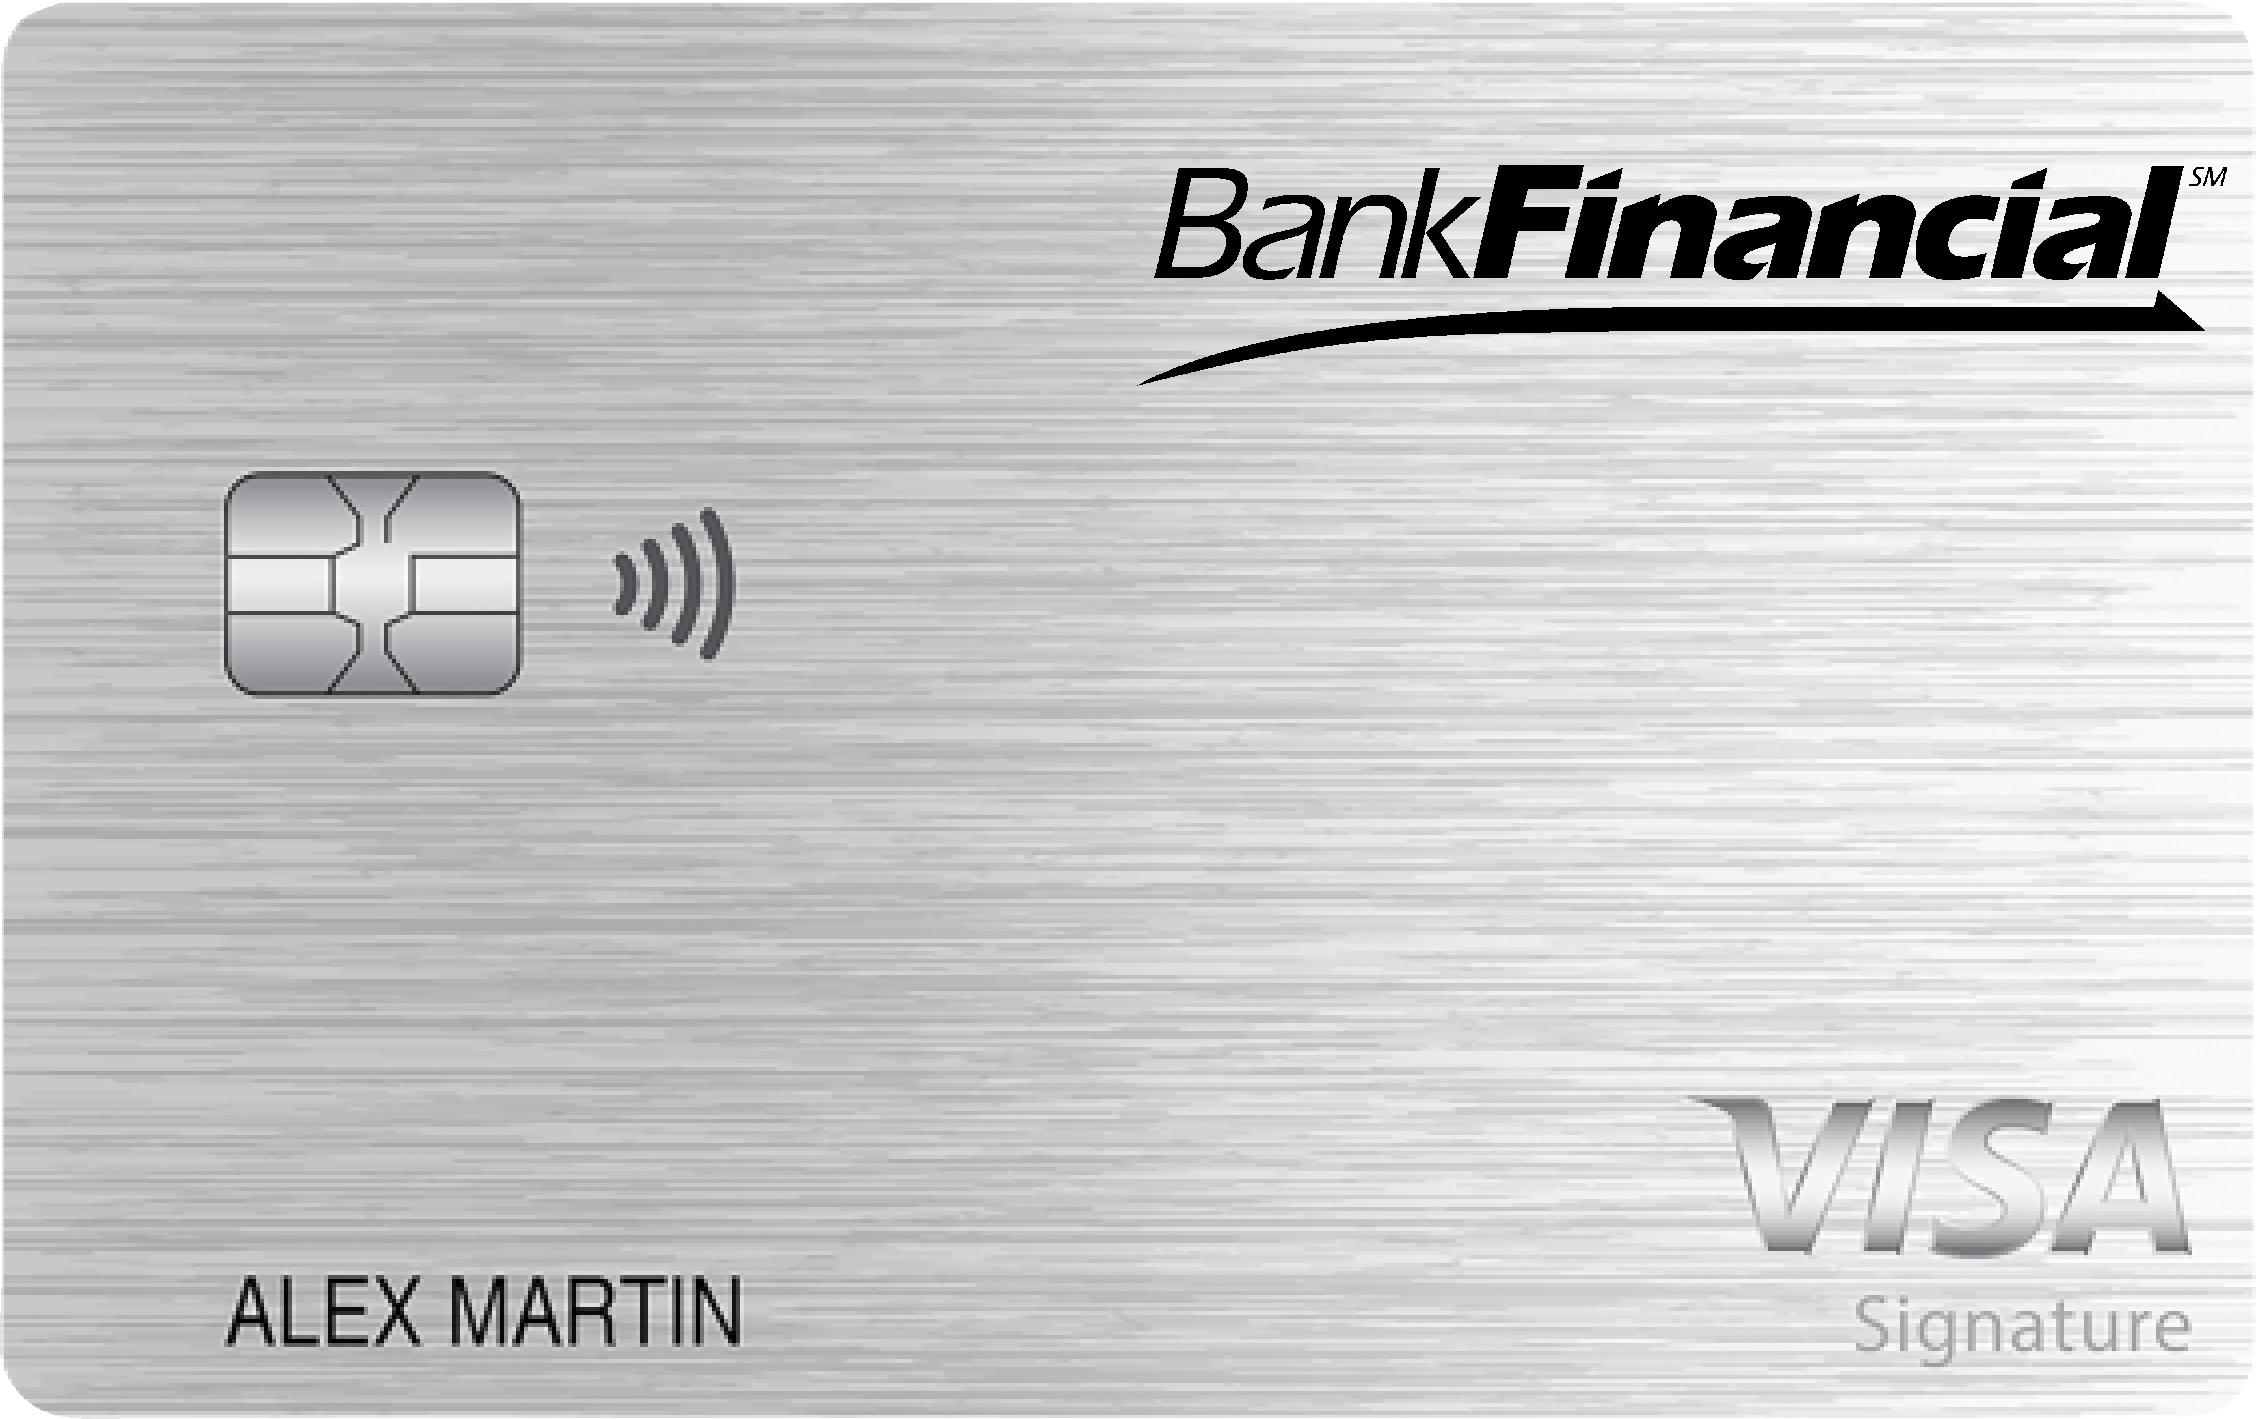 BankFinancial Max Cash Preferred Card